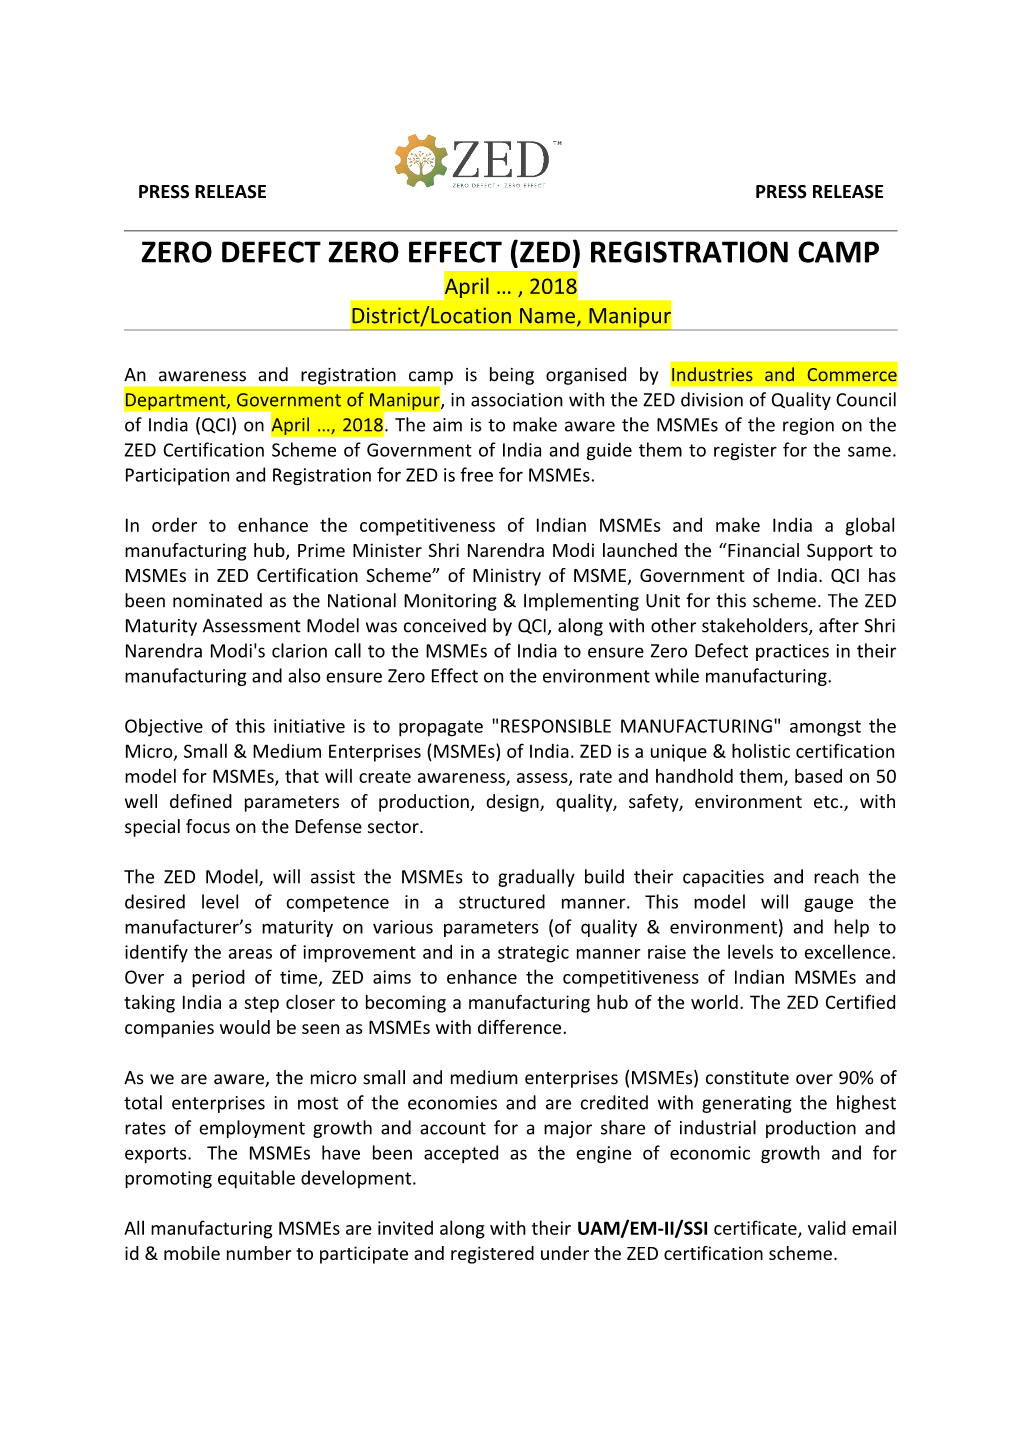 Zero Defect Zero Effect (Zed) Registration Camp